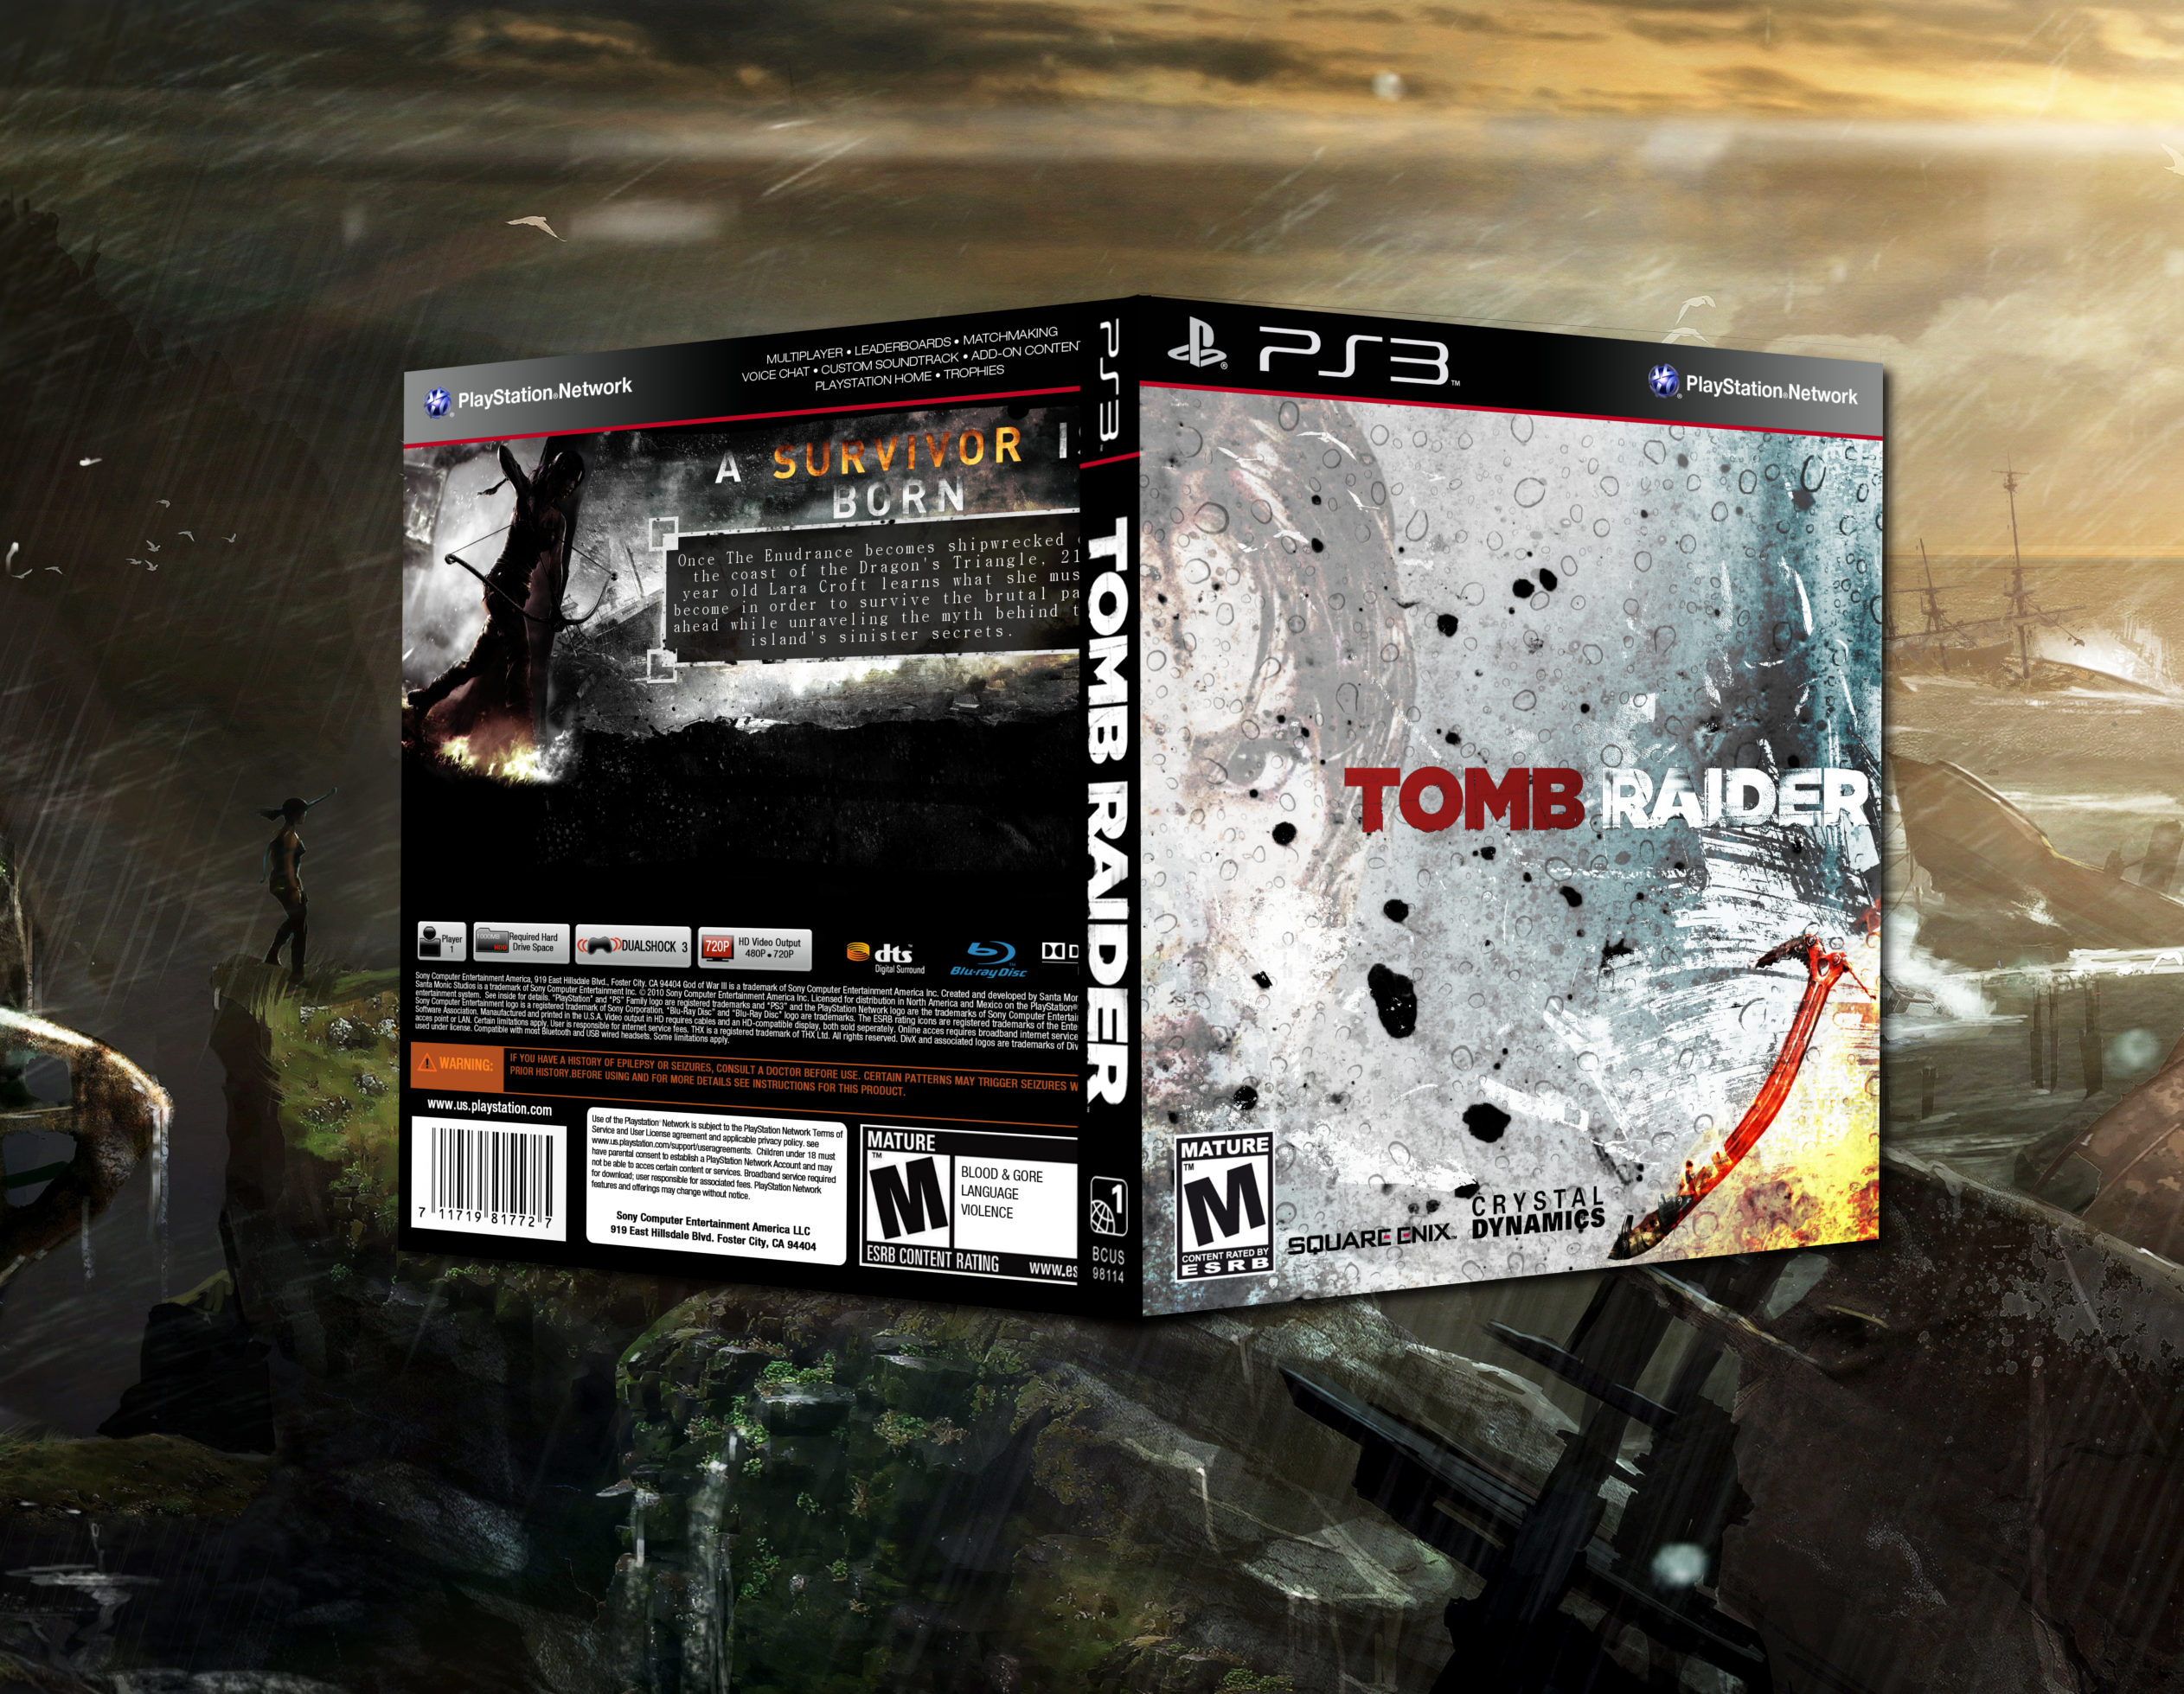 Tomb Raider 2013 box cover